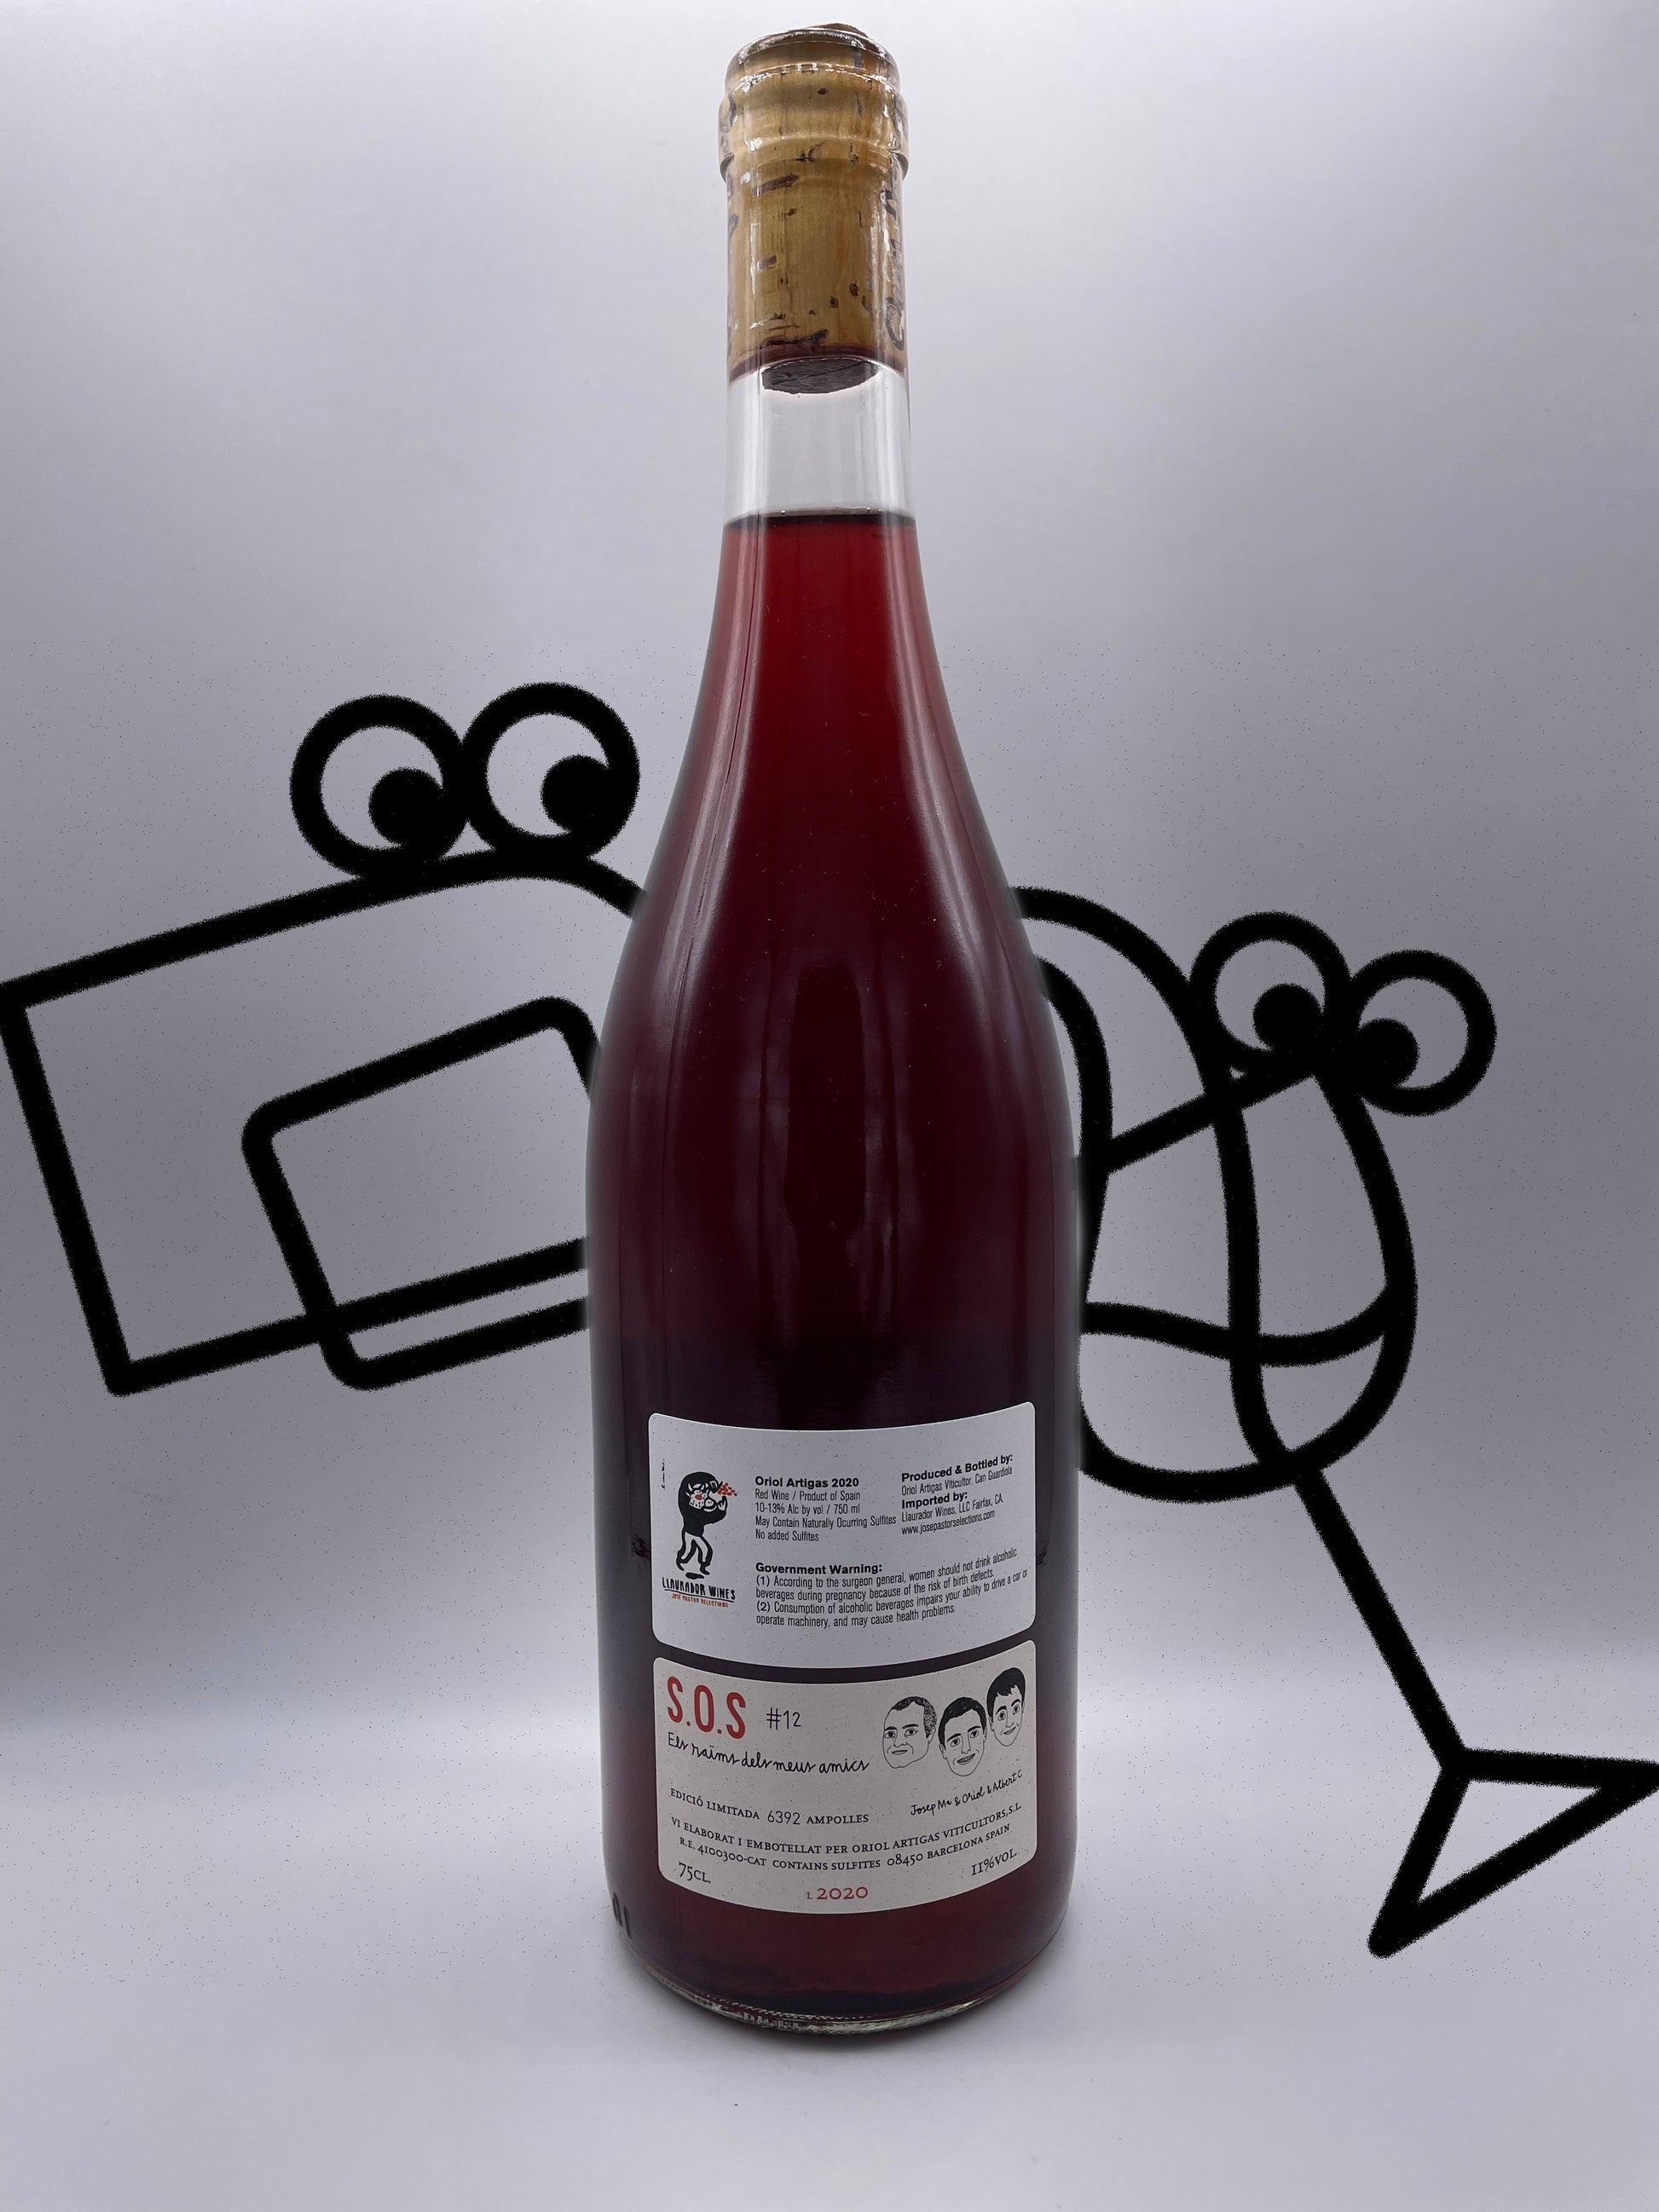 Oriol Artigas SOS#12 Succes Vinicola Negre 2020 Catalonia, Spain - Williston Park Wines & Spirits